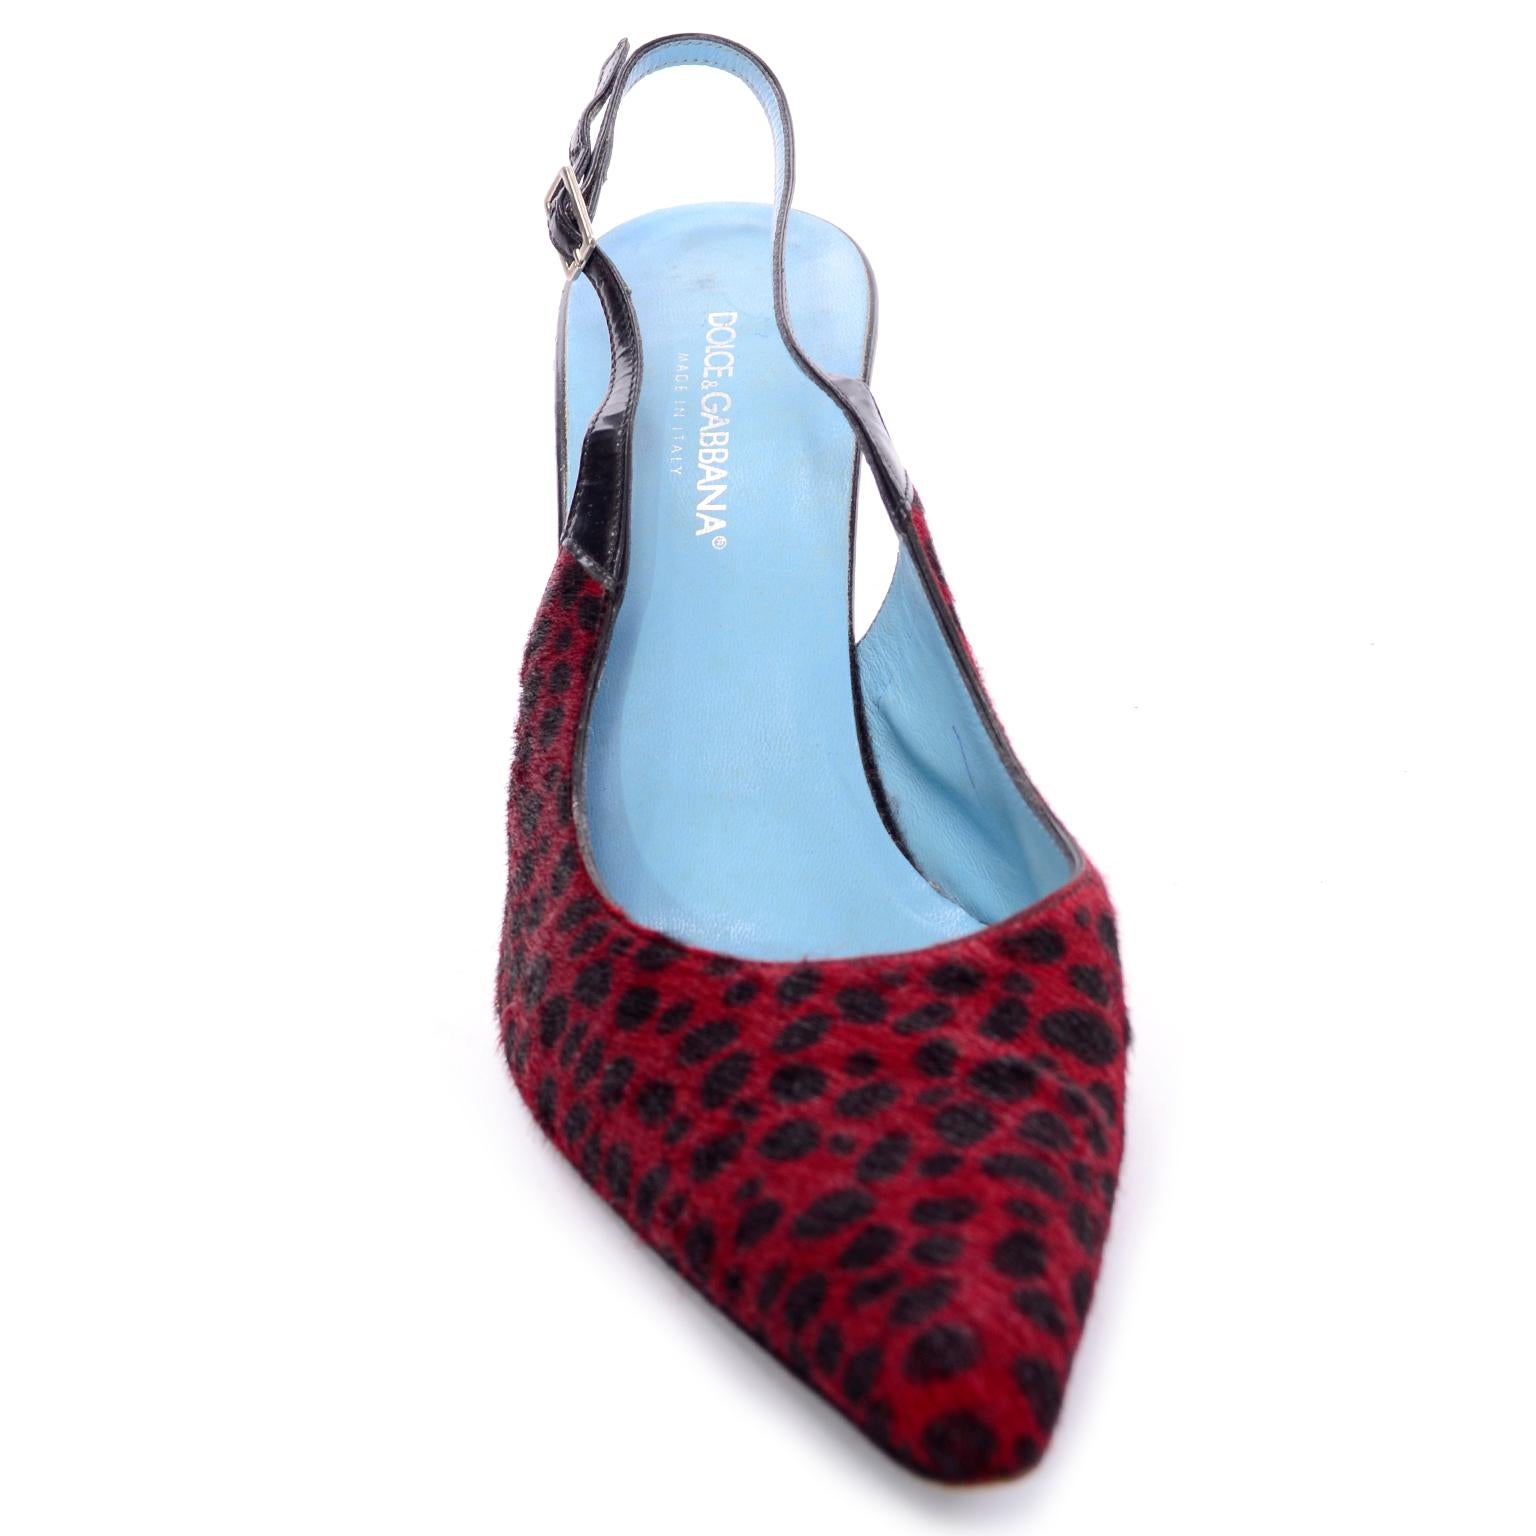 Brown Dolce & Gabbana Animal Print Shoes in Red & Black Fur Slingback Heels